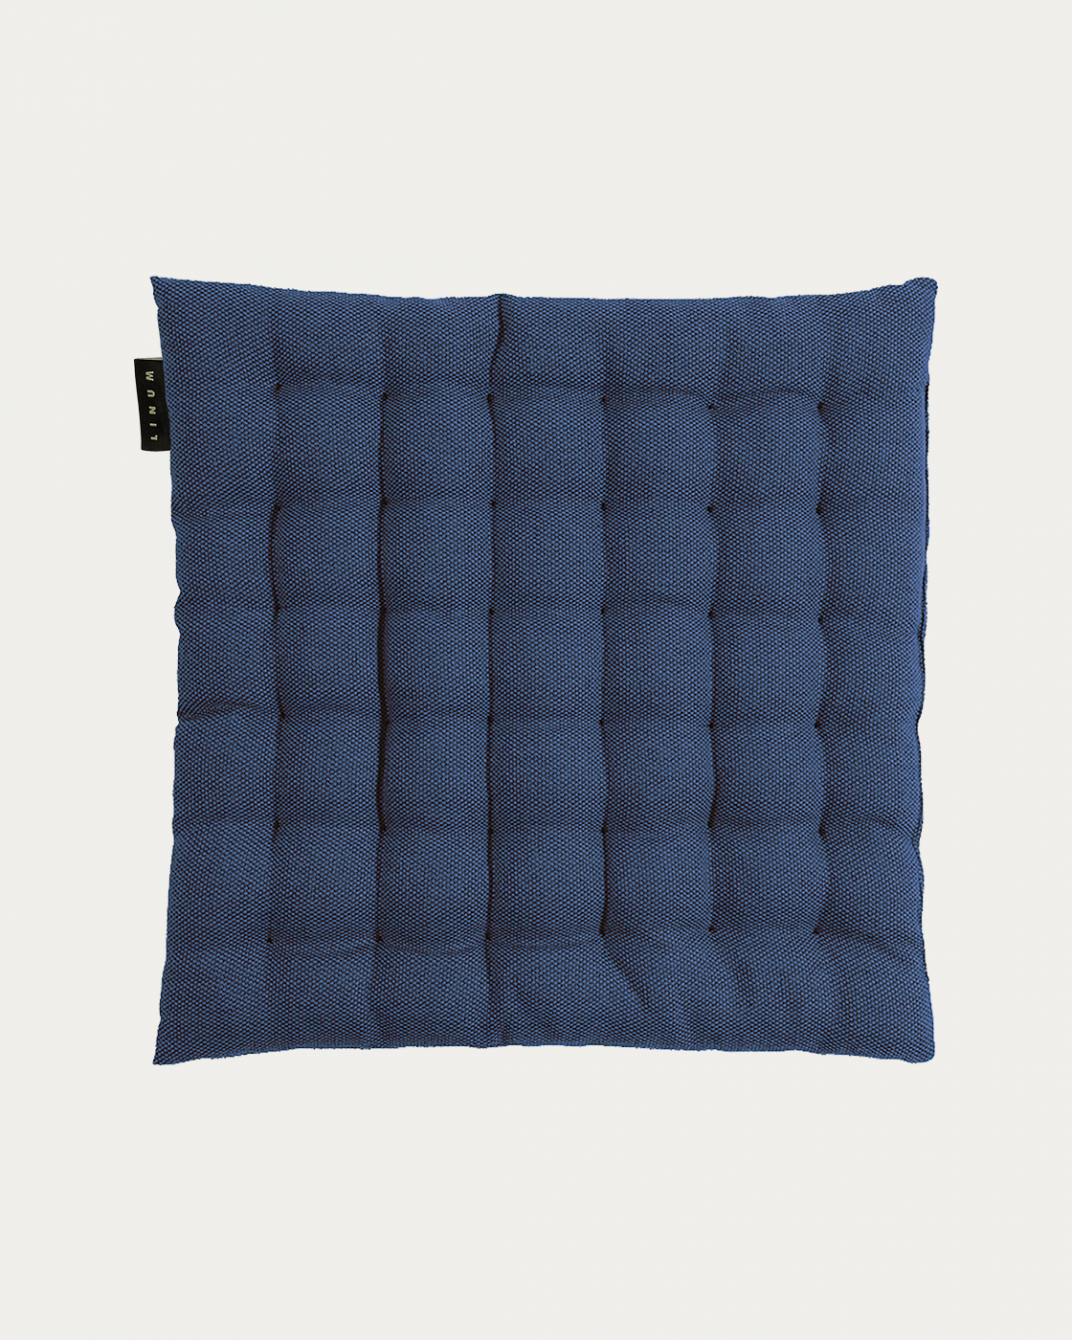 PEPPER Seat cushion 40x40 cm Indigo blue